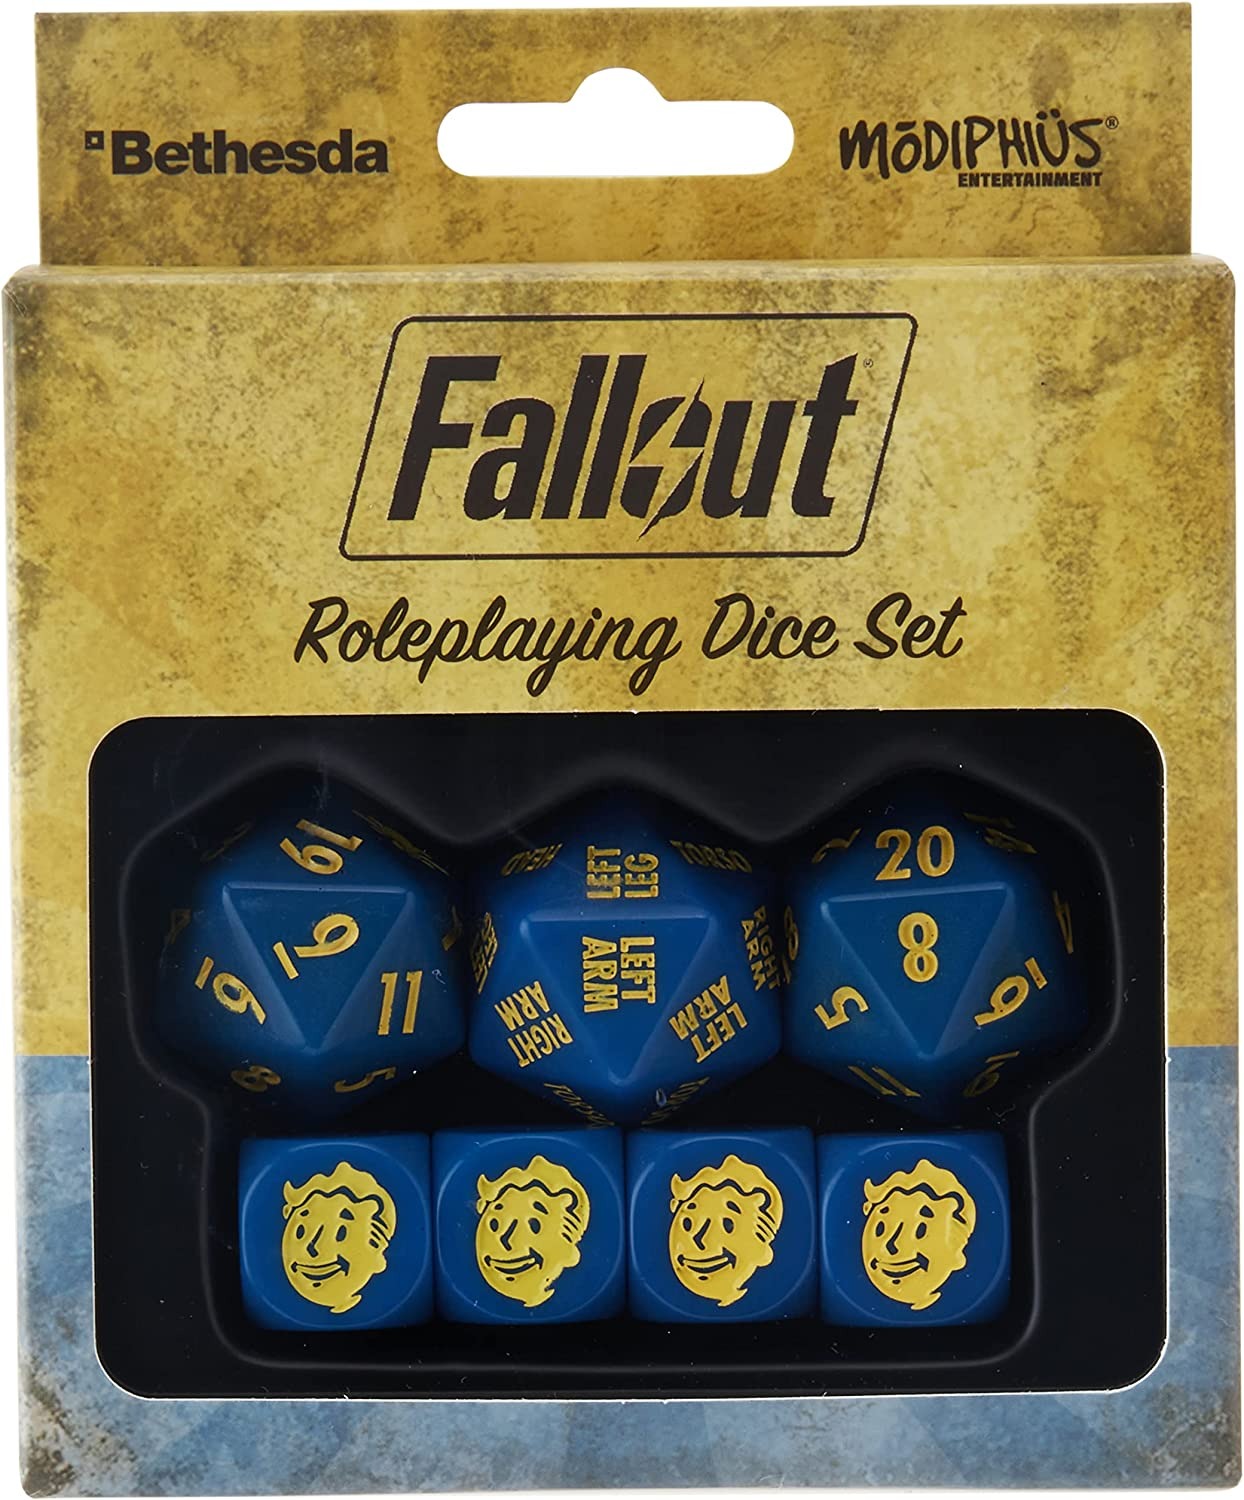 Fallout Rpg 2 D20 Dice Set